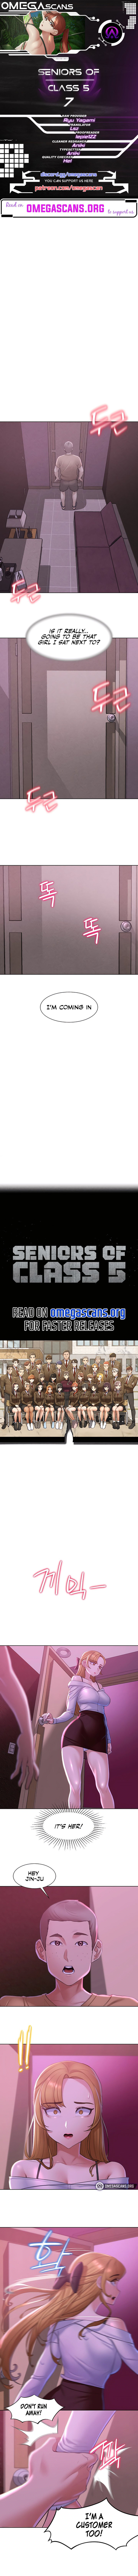 seniors-of-class-5-chap-7-0